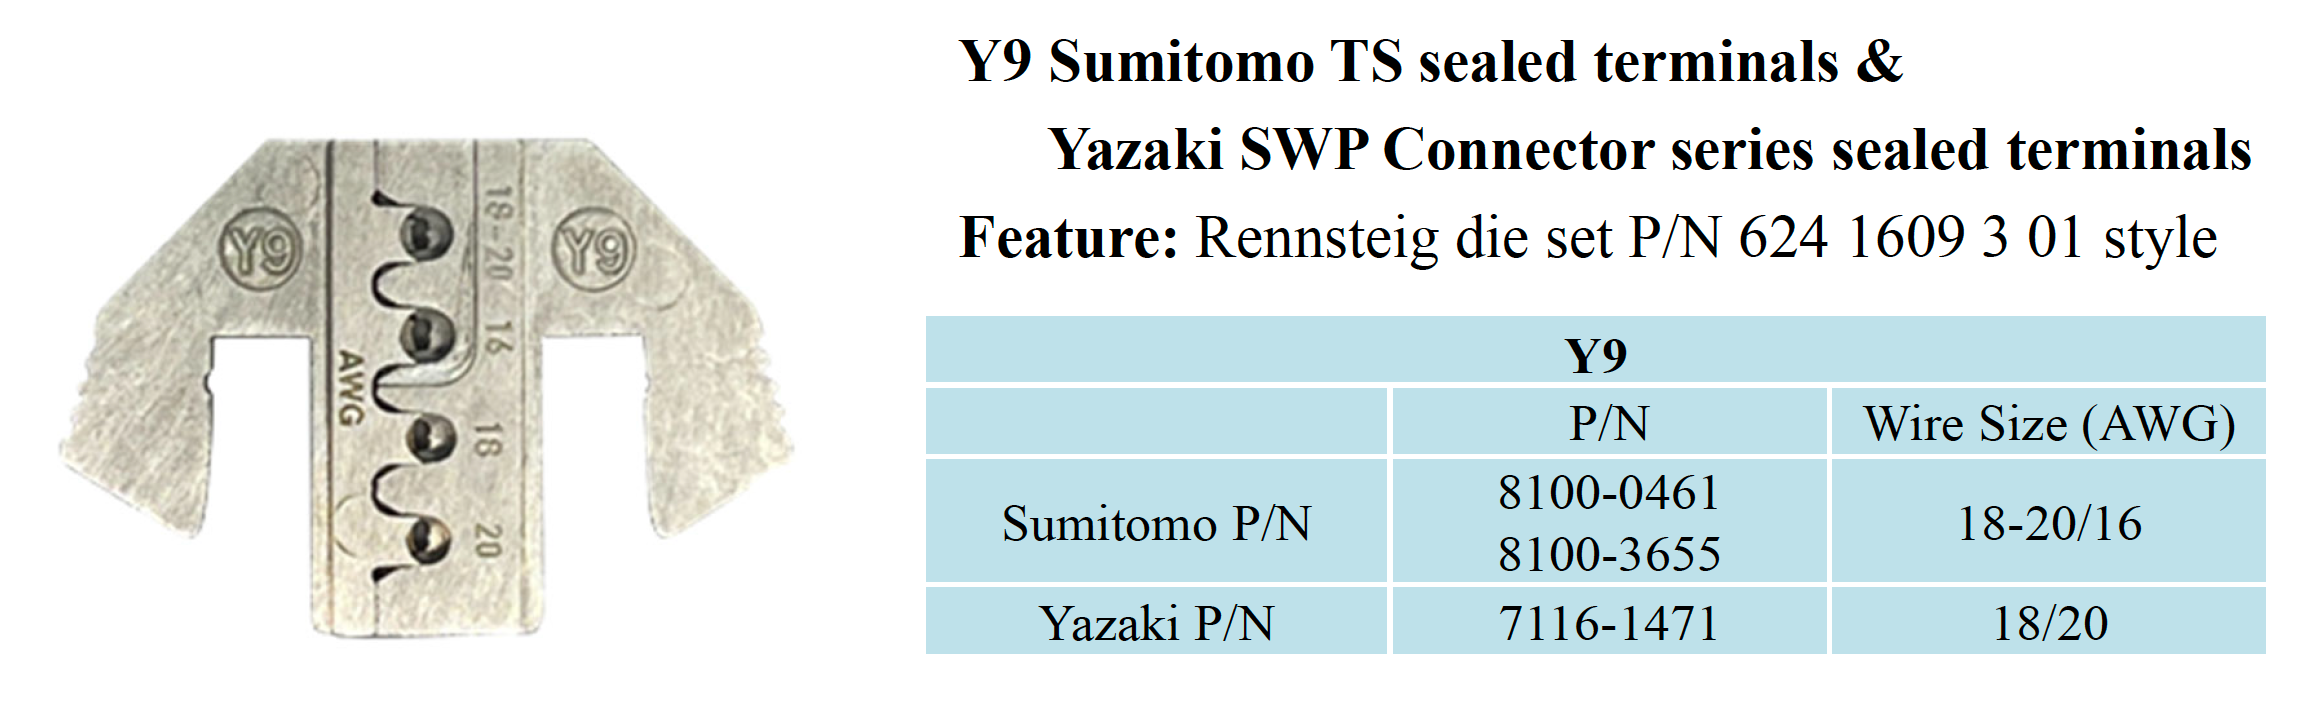 Crimping Tool Die - Y9 Die for Sumitomo TS & Yazaki SWP Connector Series Sealed Terminals - Tool Guy Republic